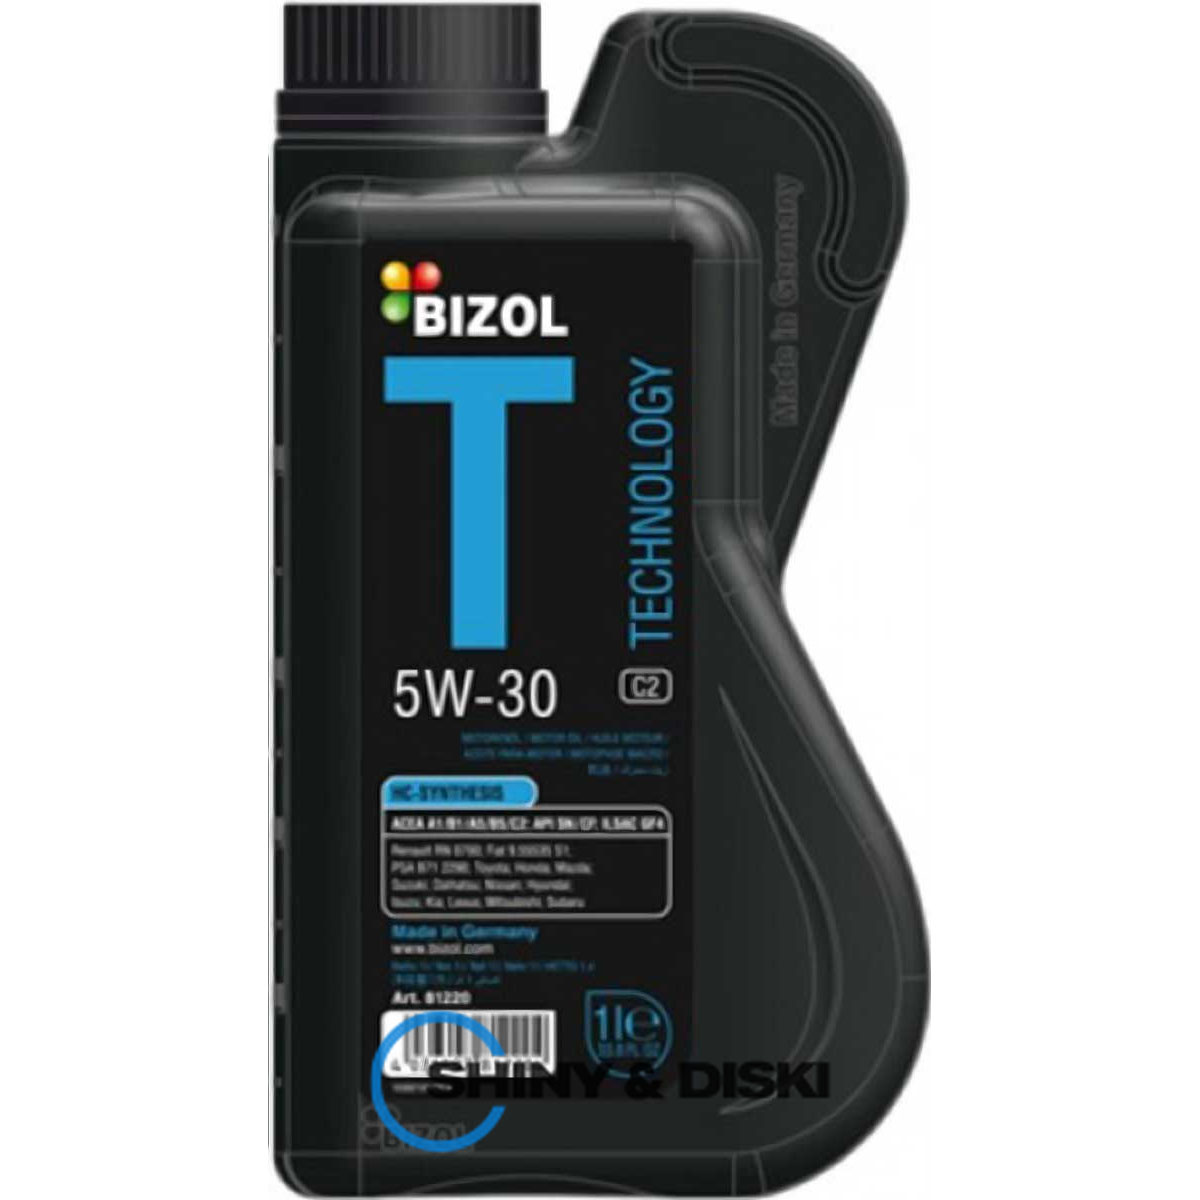 bizol technology c2 5w-30 (1л)